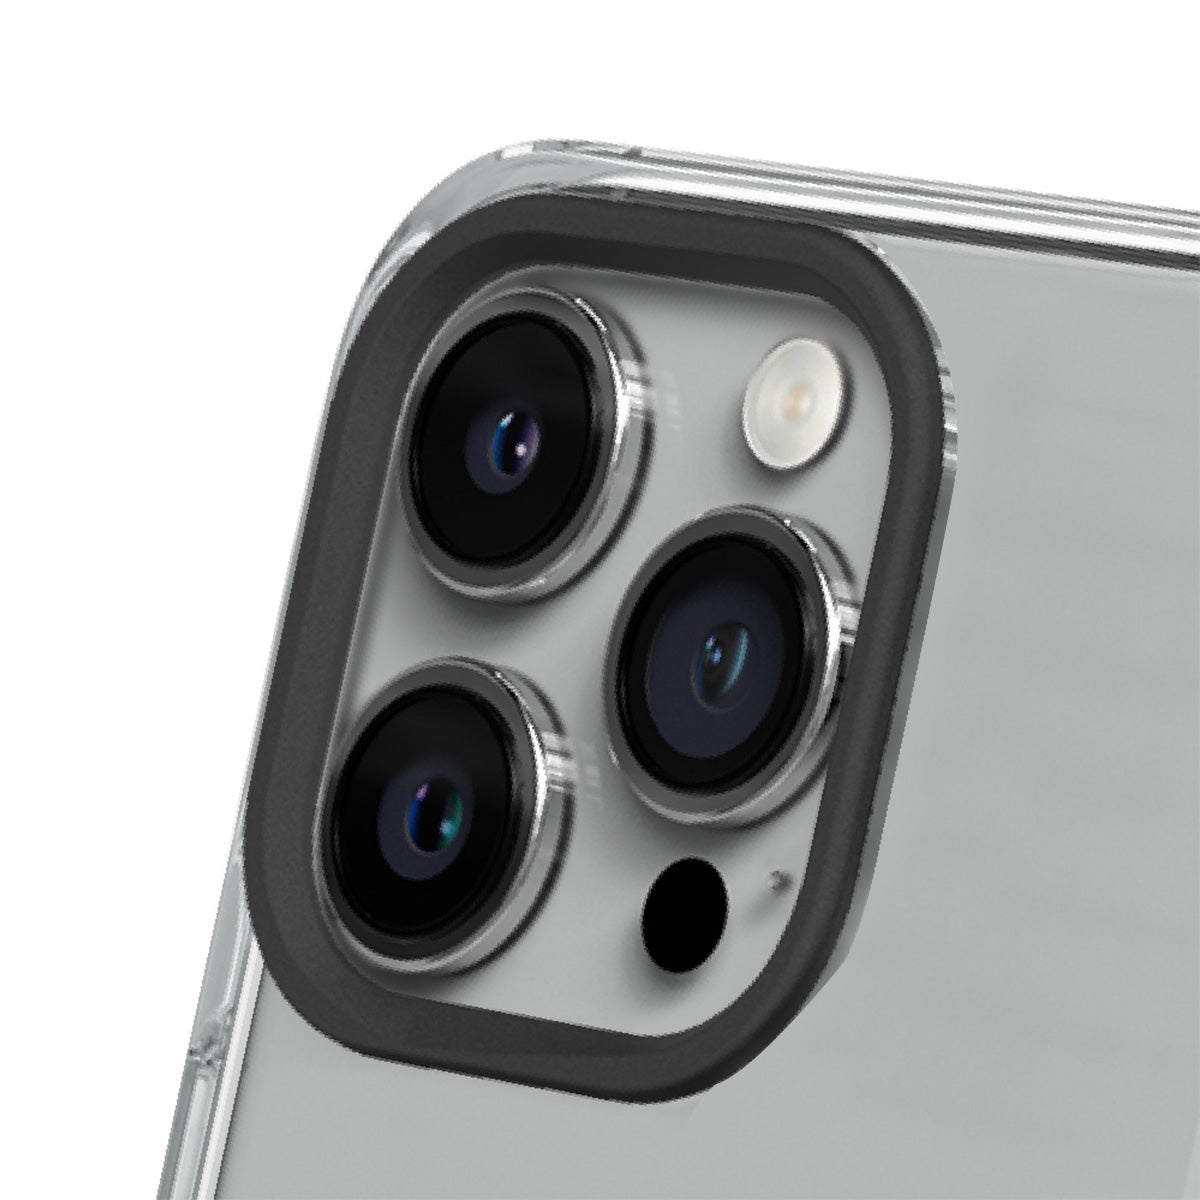 Rhinoshield Camera Ring for iPhone iPhone 15 Pro/15 Pro Max